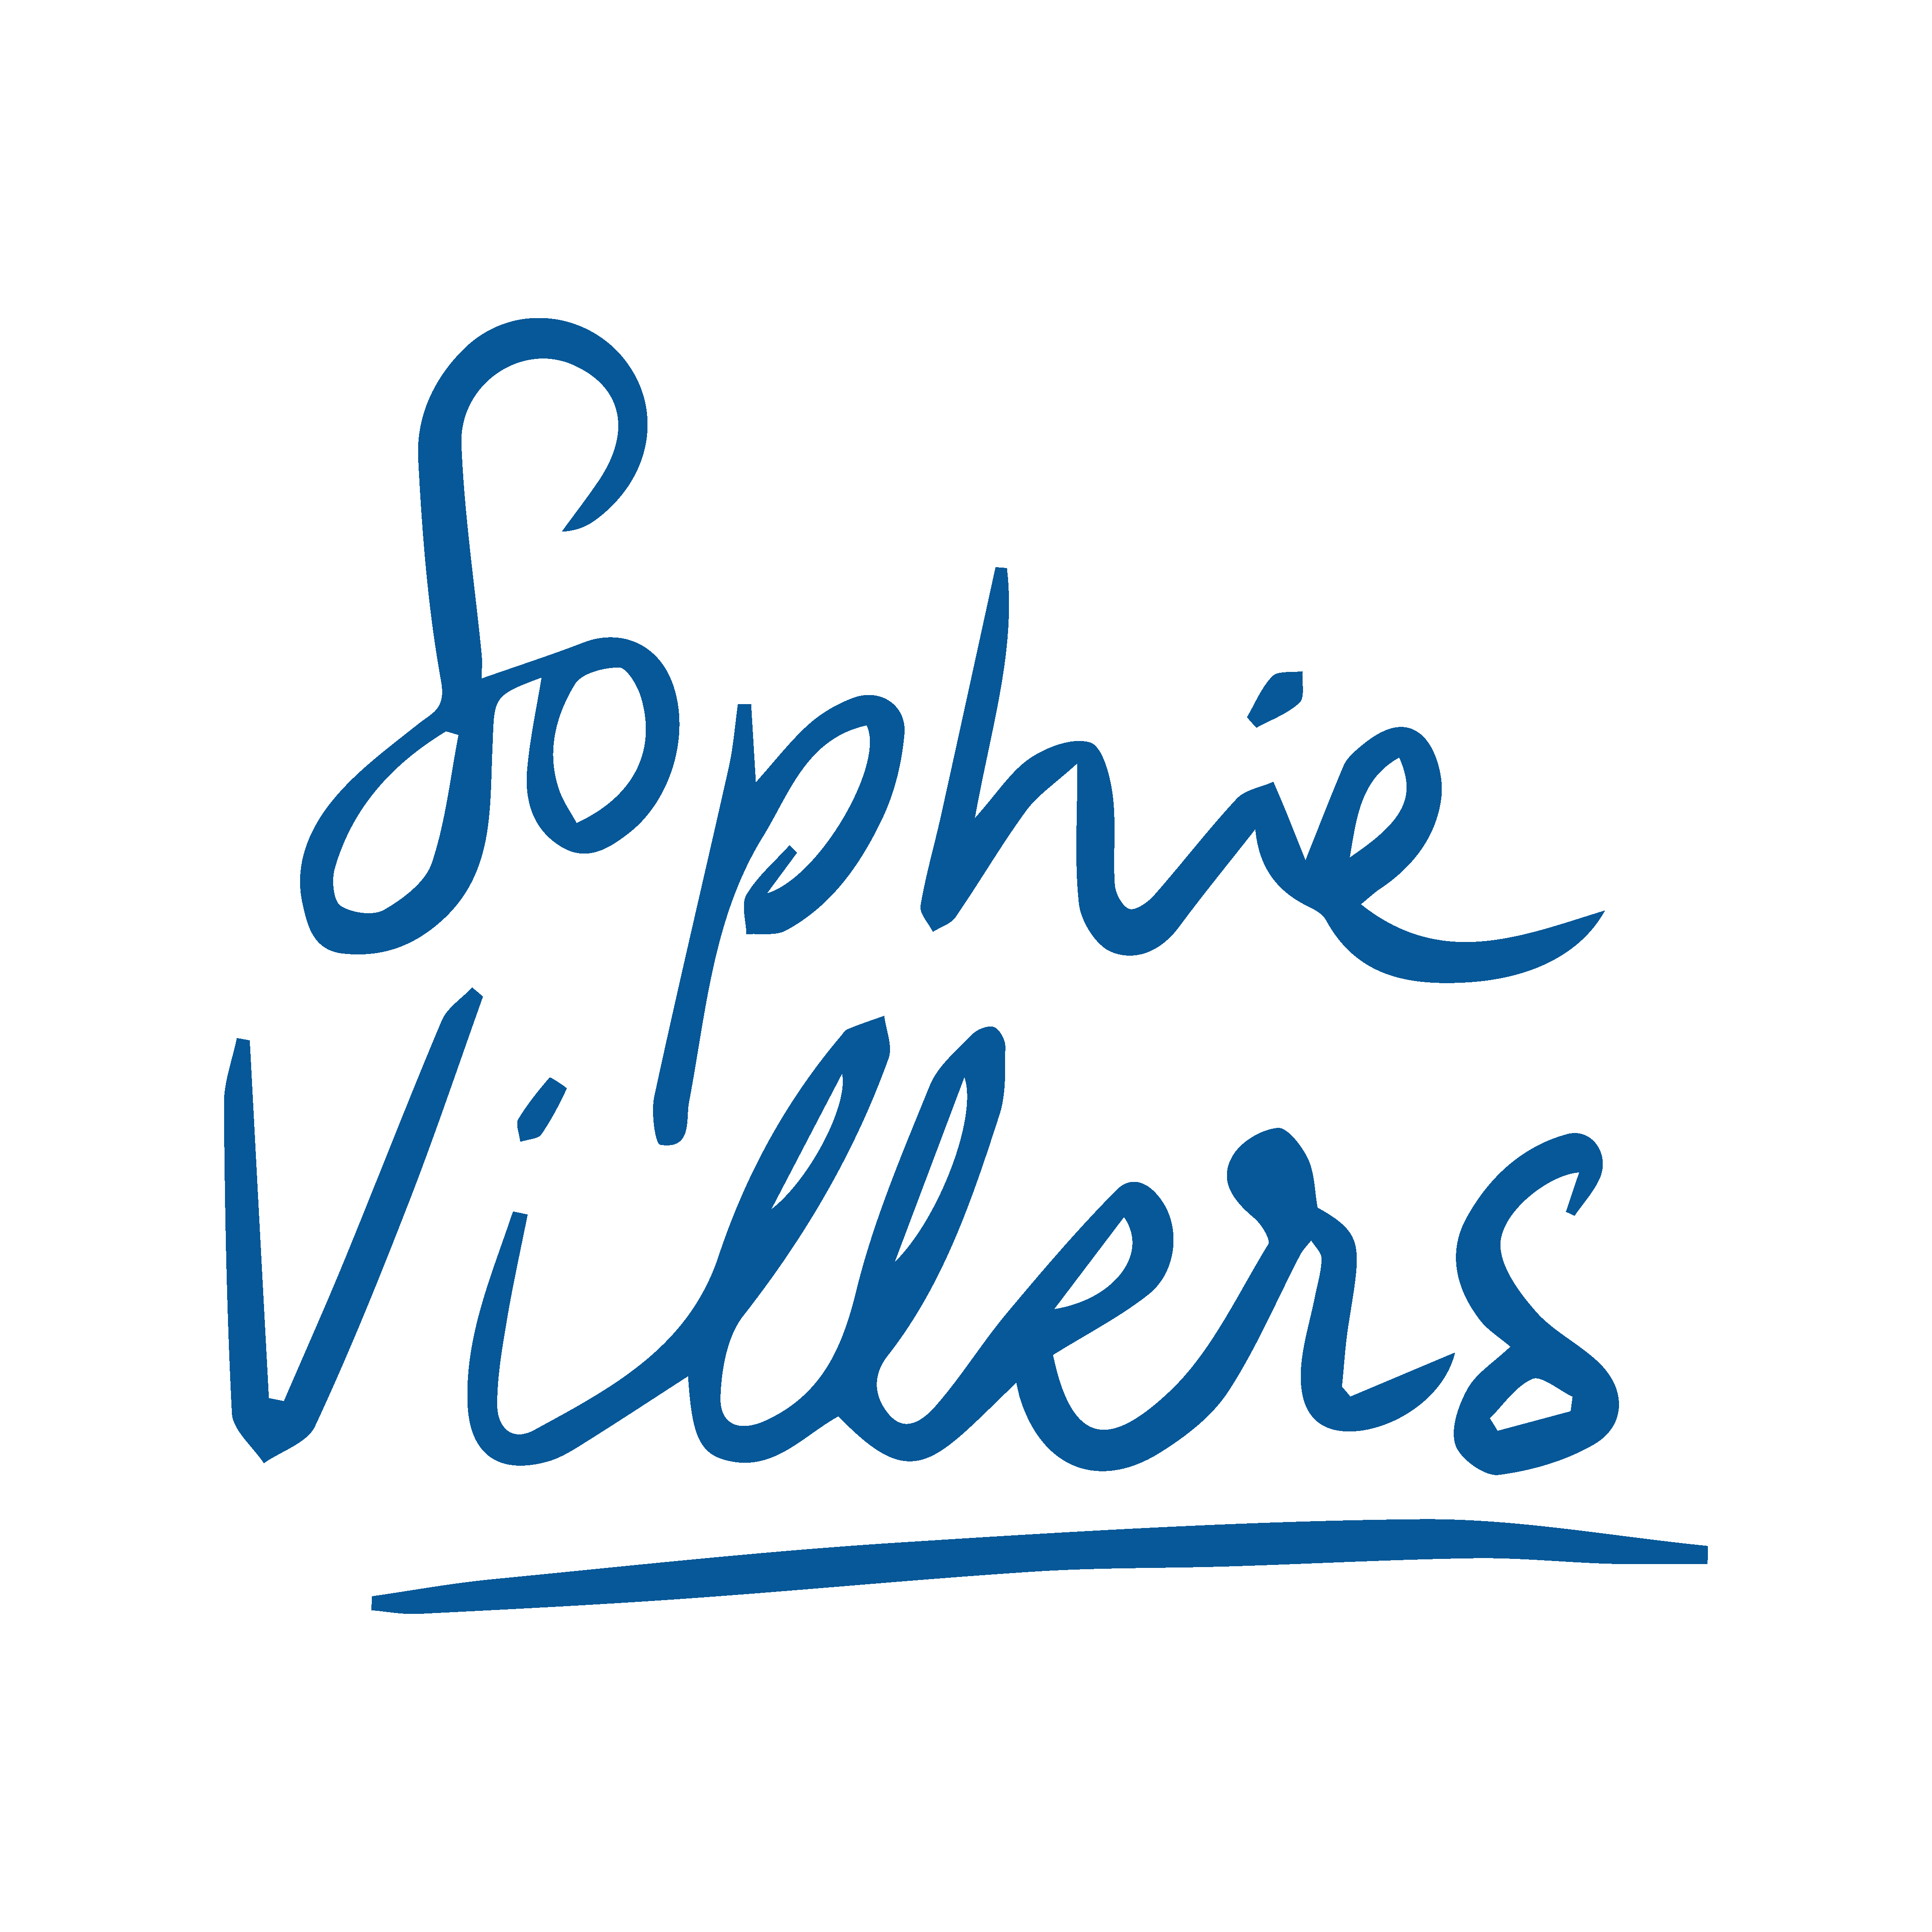 Sophie Villers